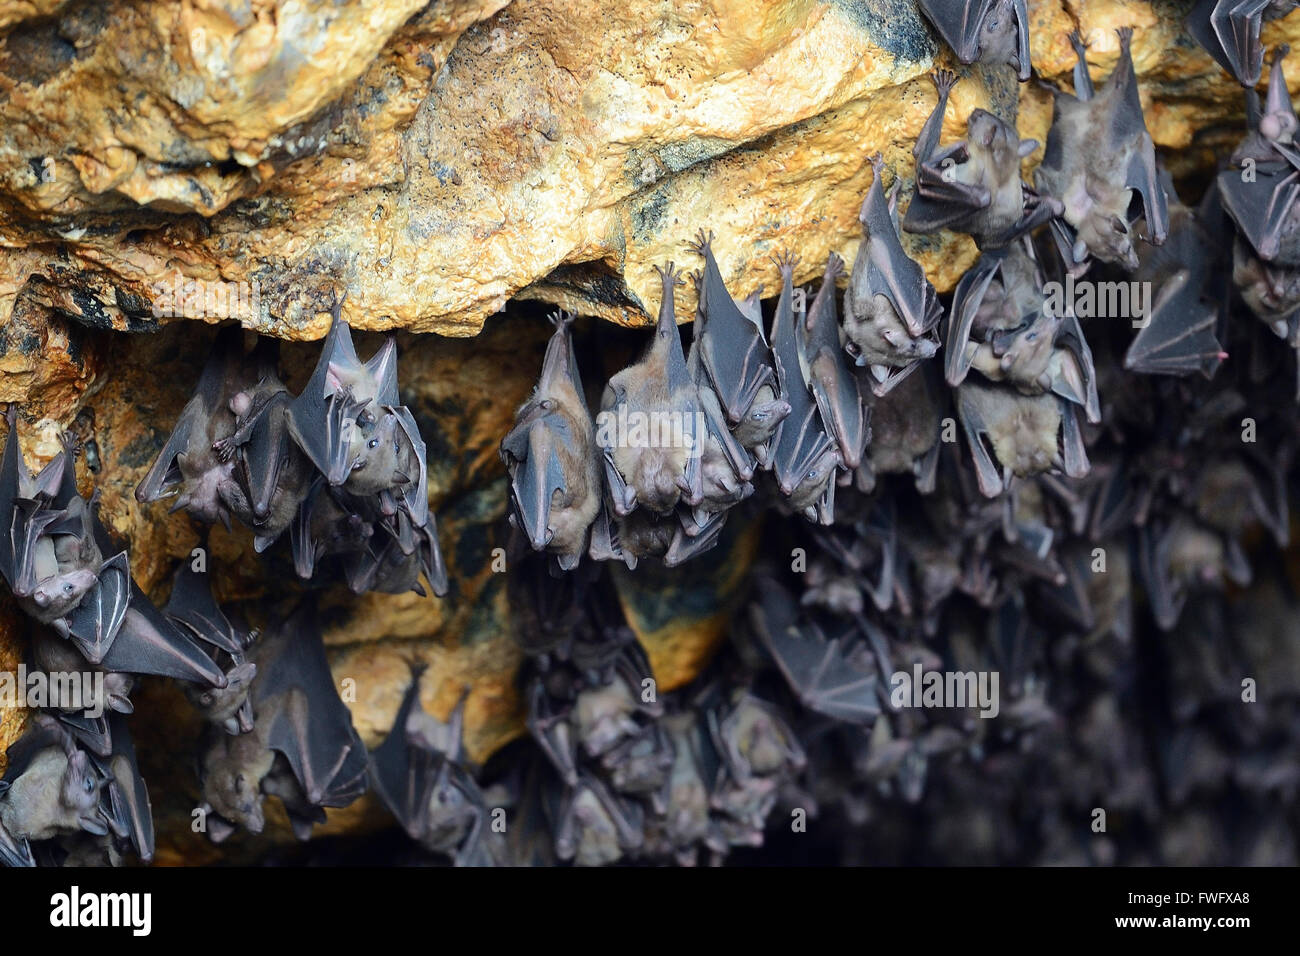 Bats in cave, bat temple Goa Lawah, Bali, Indonesia Stock Photo